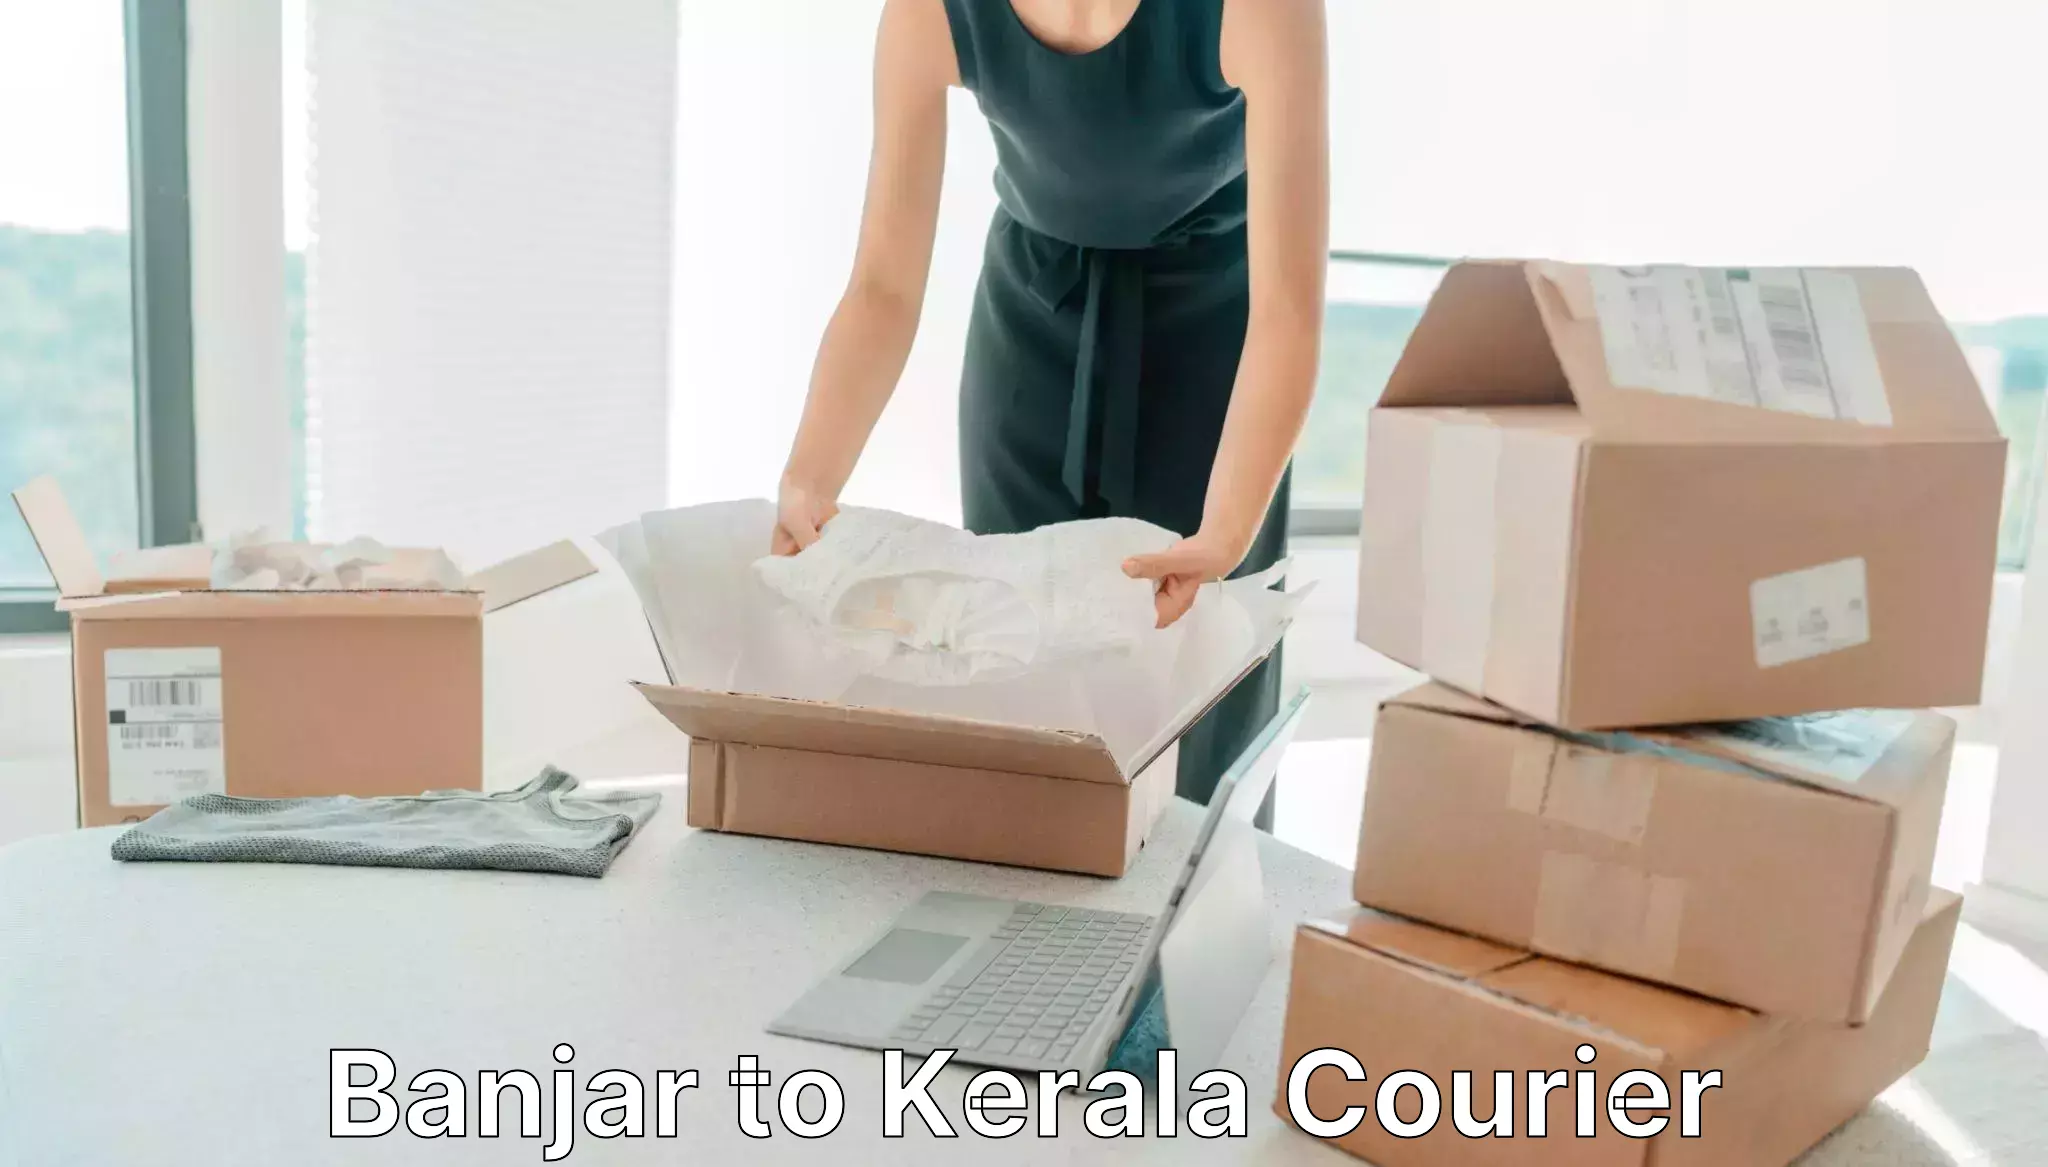 User-friendly courier app Banjar to Kerala